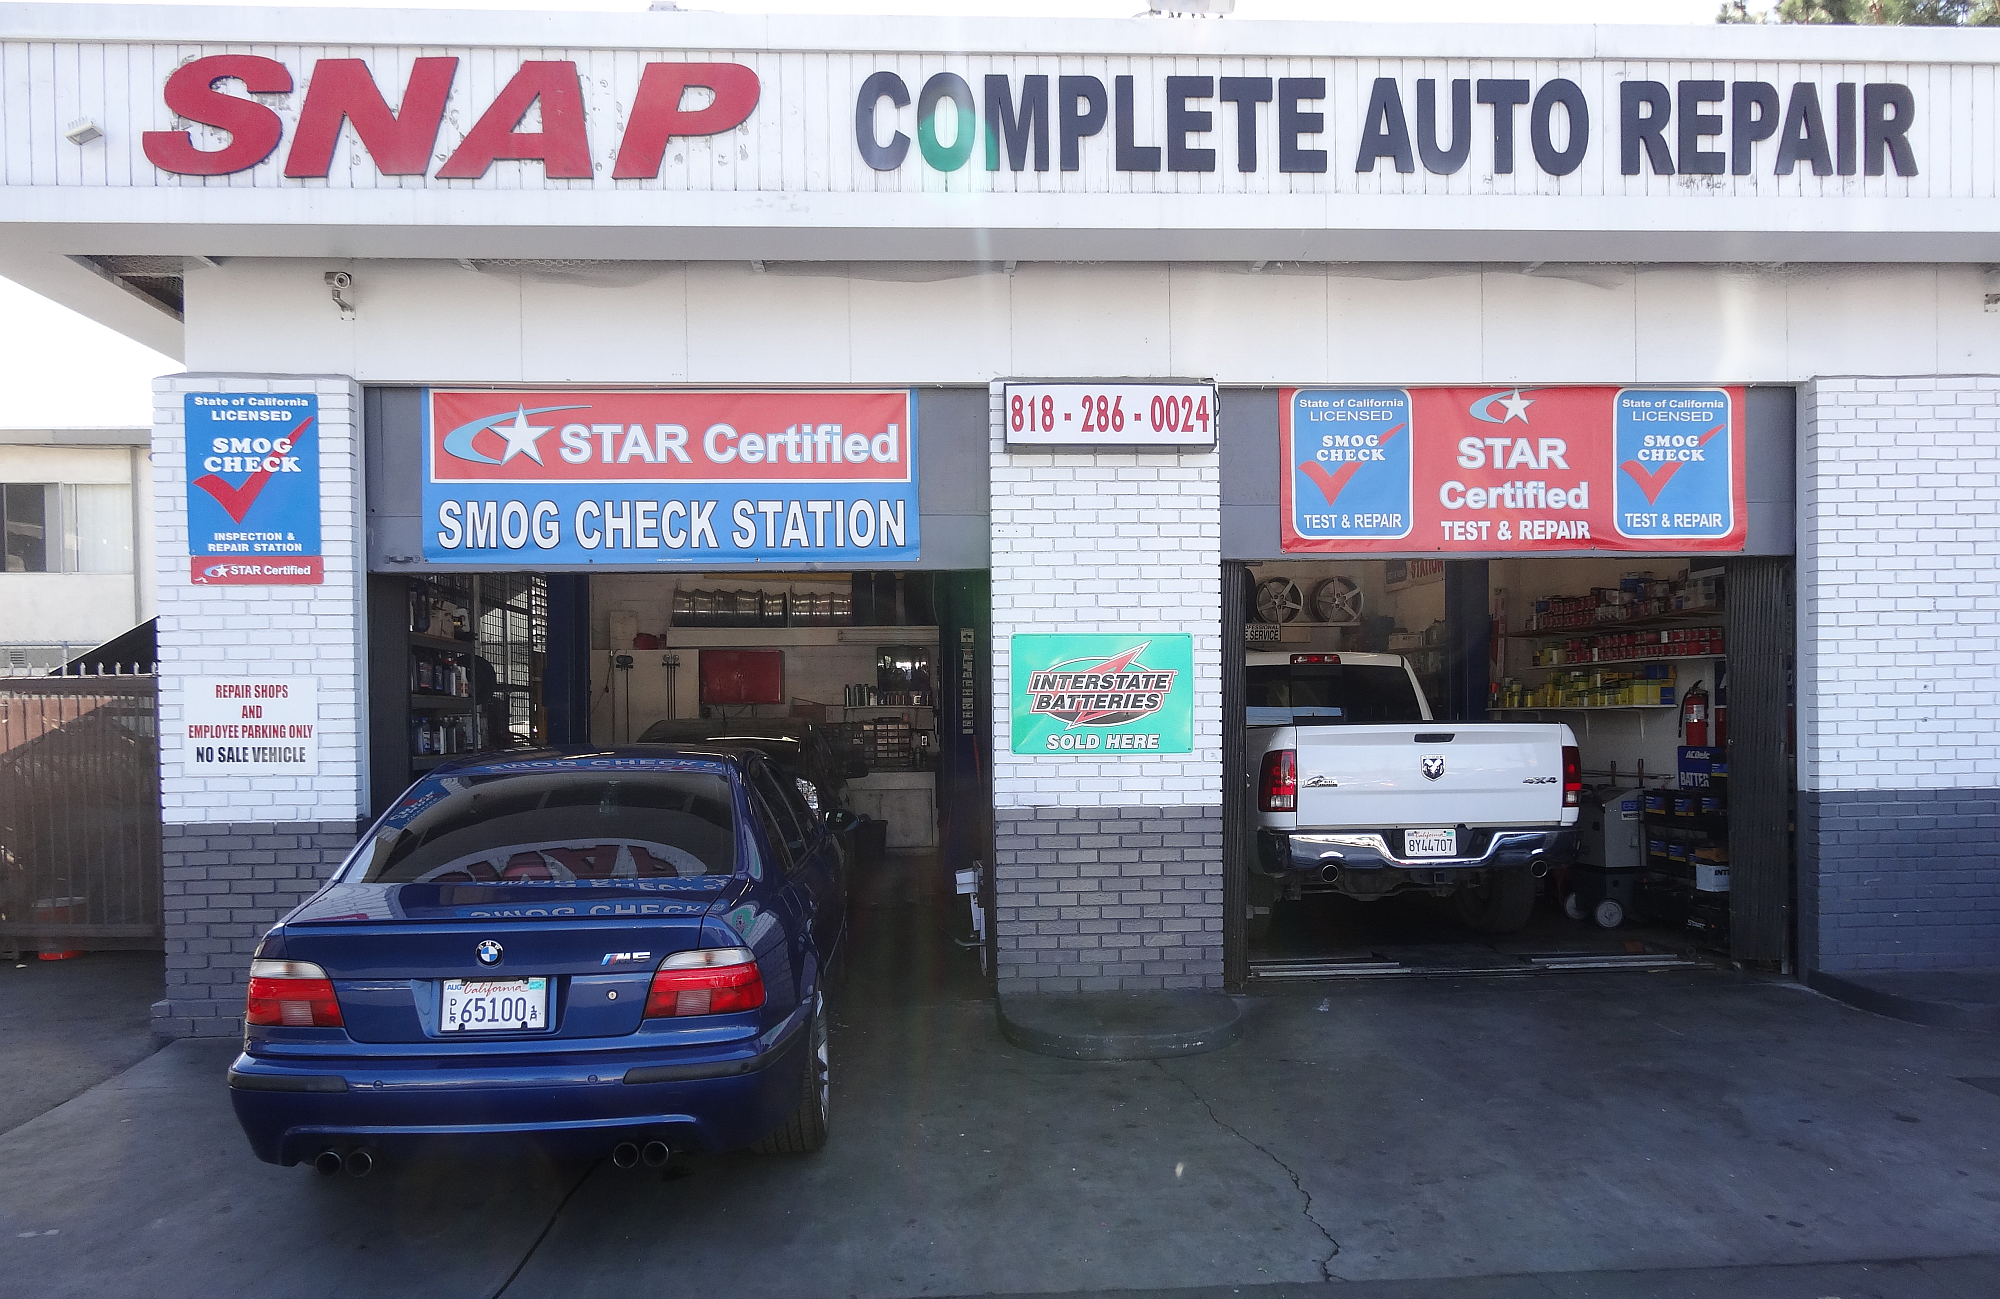 Snap Complete Auto Repair & STAR Smog